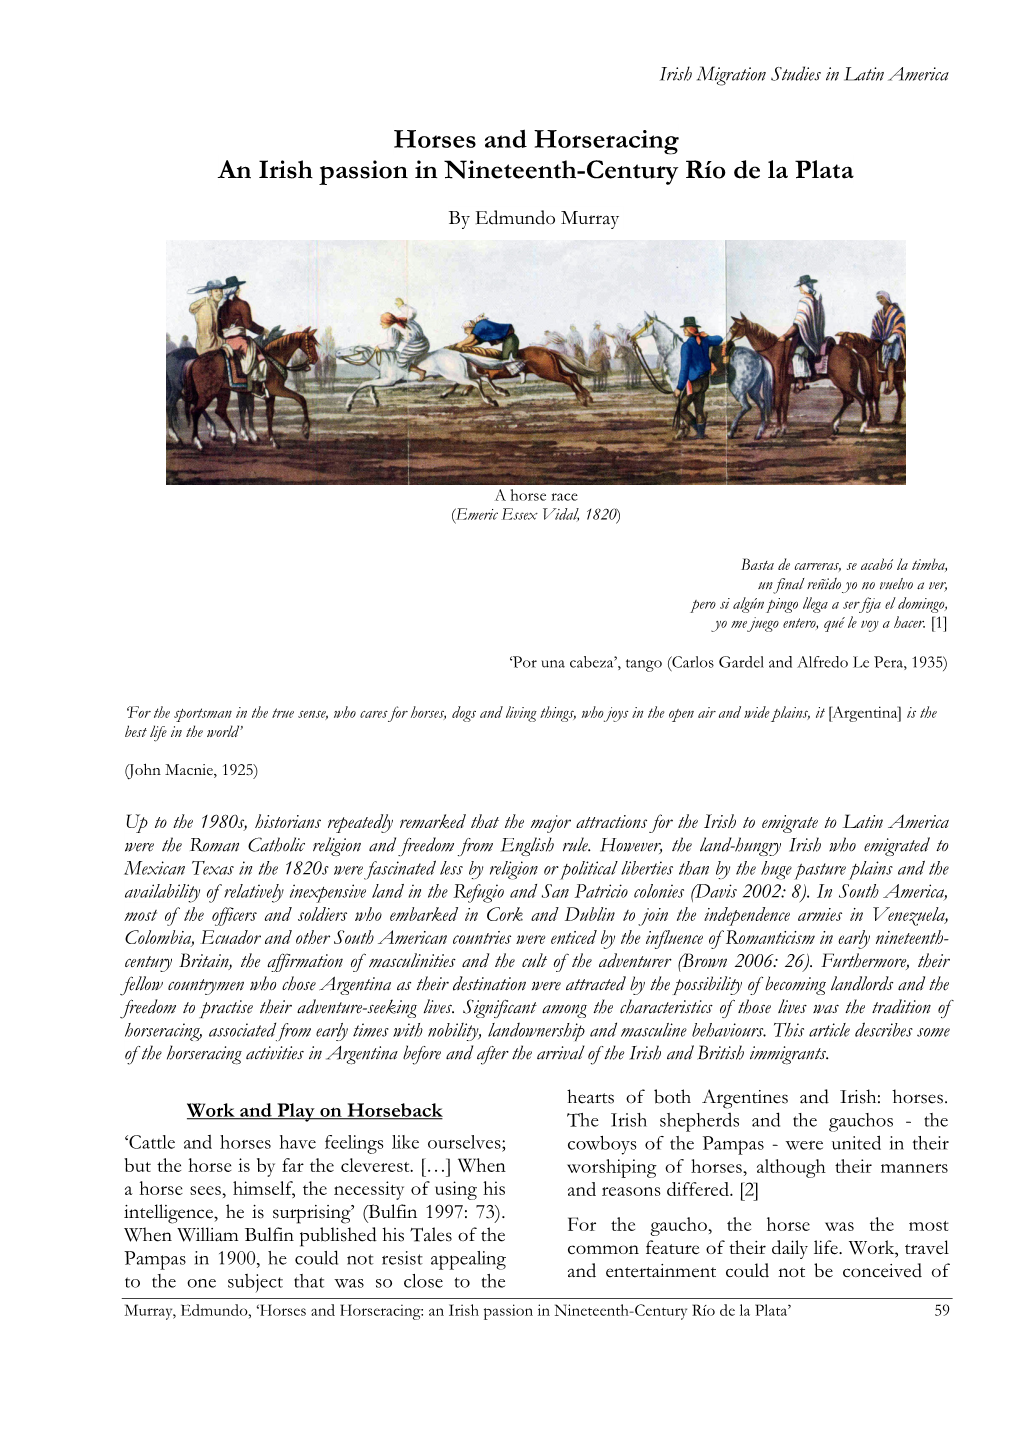 Horses and Horseracing an Irish Passion in Nineteenth-Century Río De La Plata